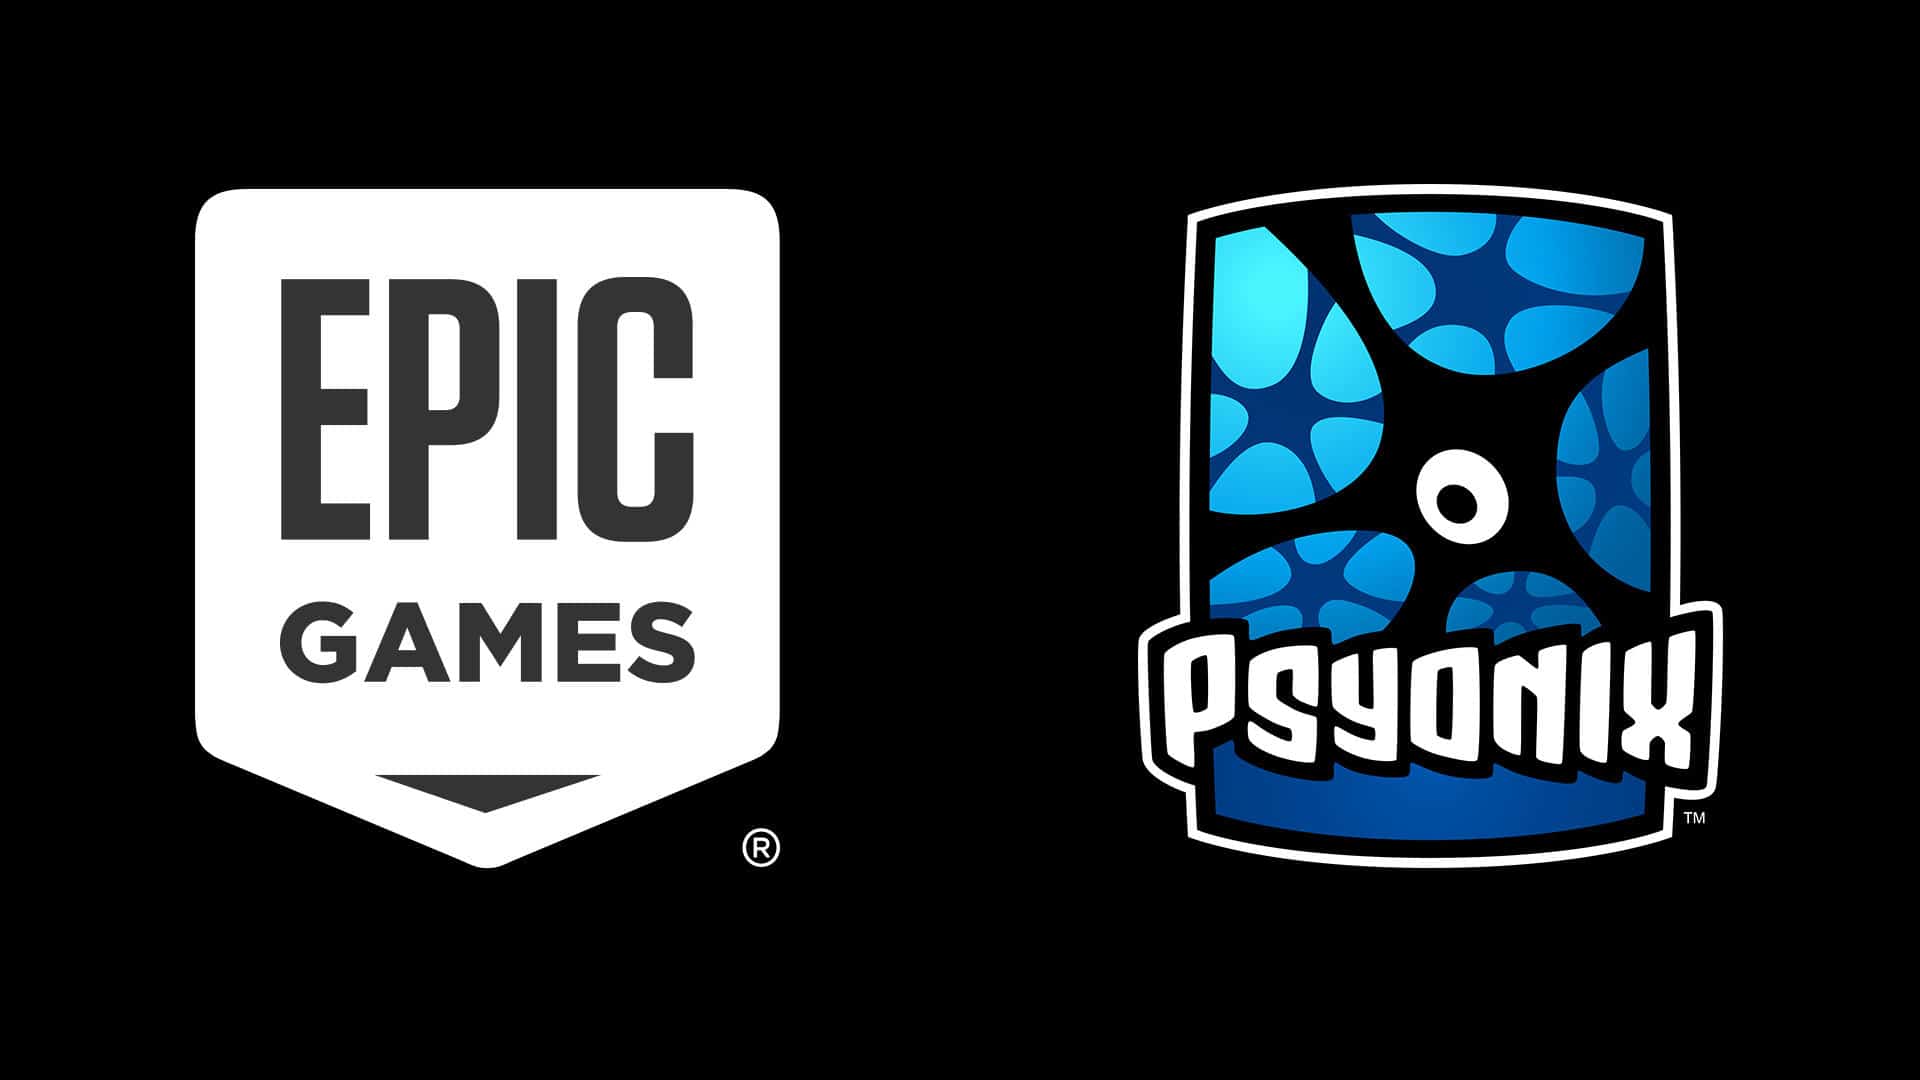 Epic Games adquiere a Psyonix desarrollador de Rocket League, GamersRD